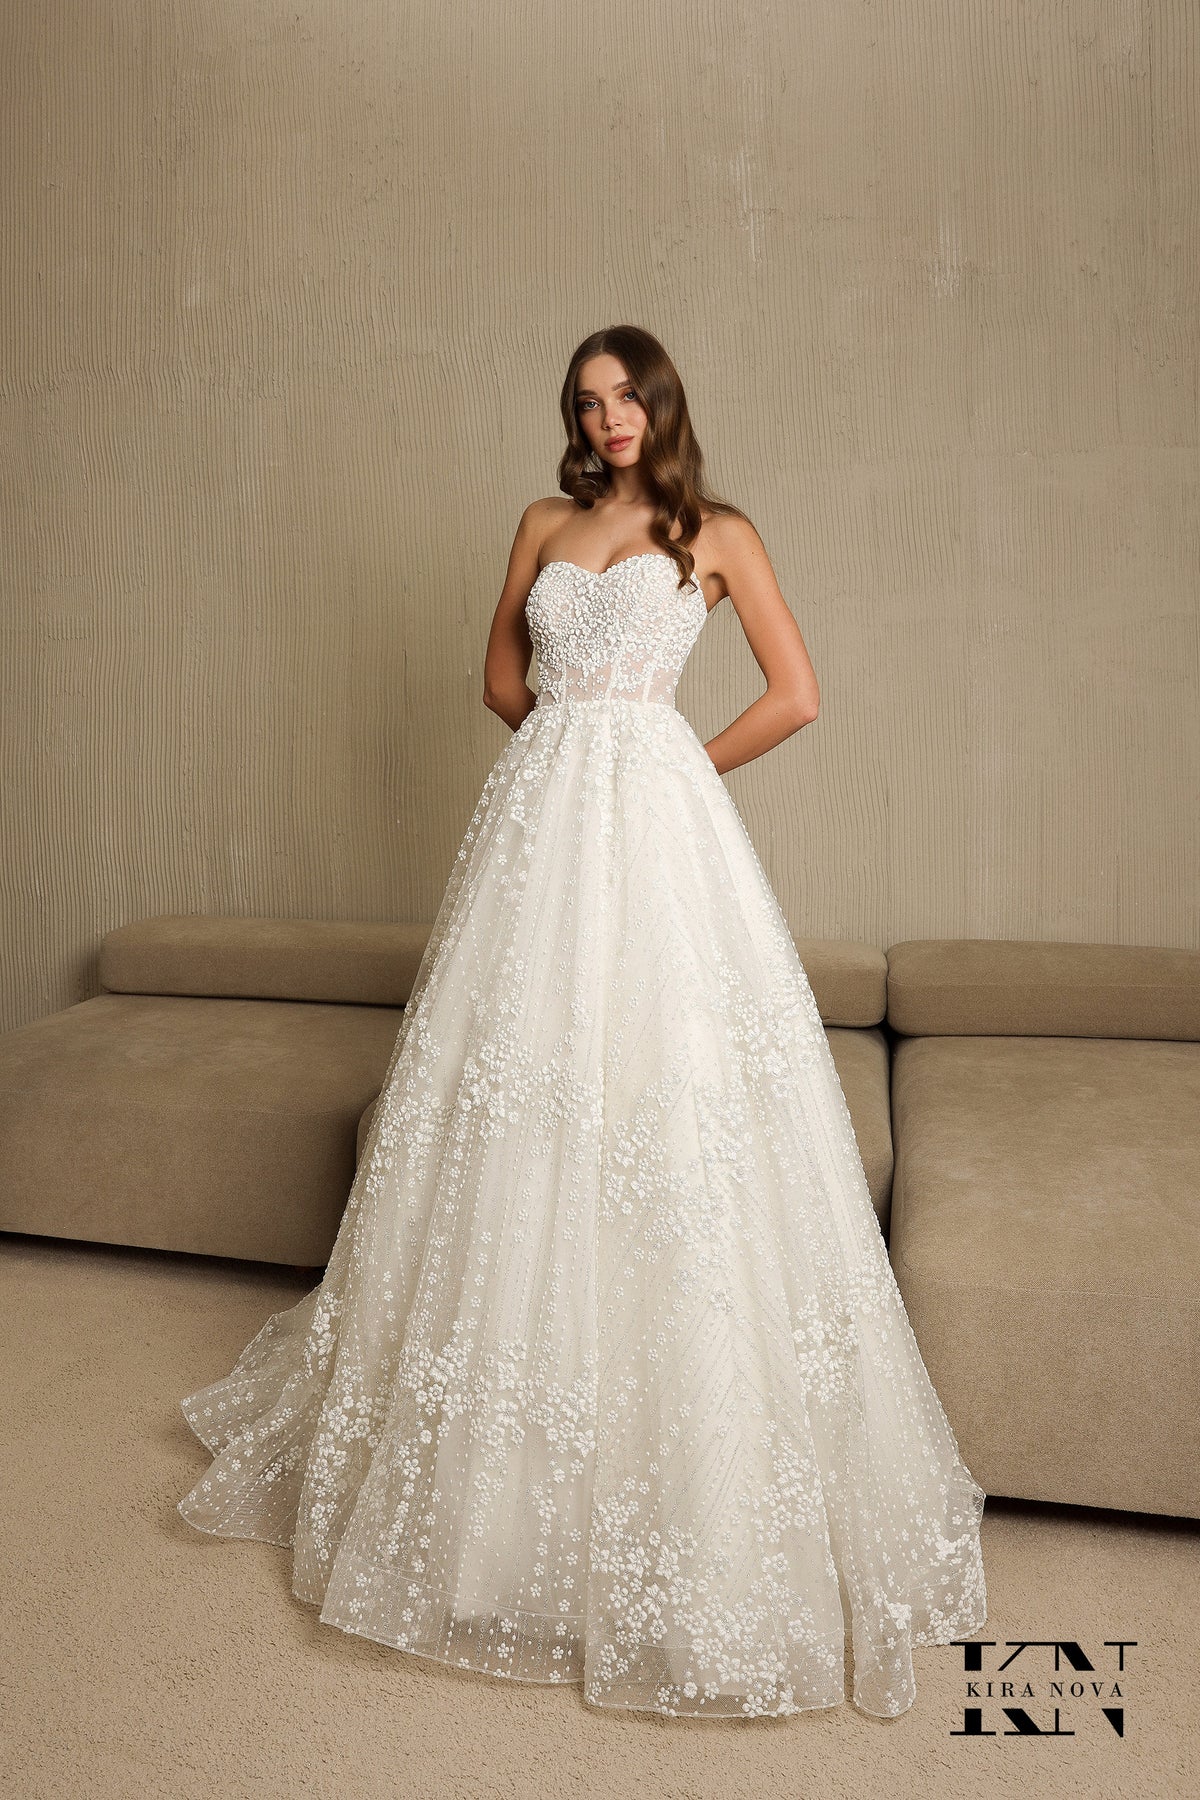 Romantic Sleeveless Strapless Wedding Dress Off White Bridal Gown Full Aline Sweep Train Corset Back Dress Sweetheart Neckline Sparkle